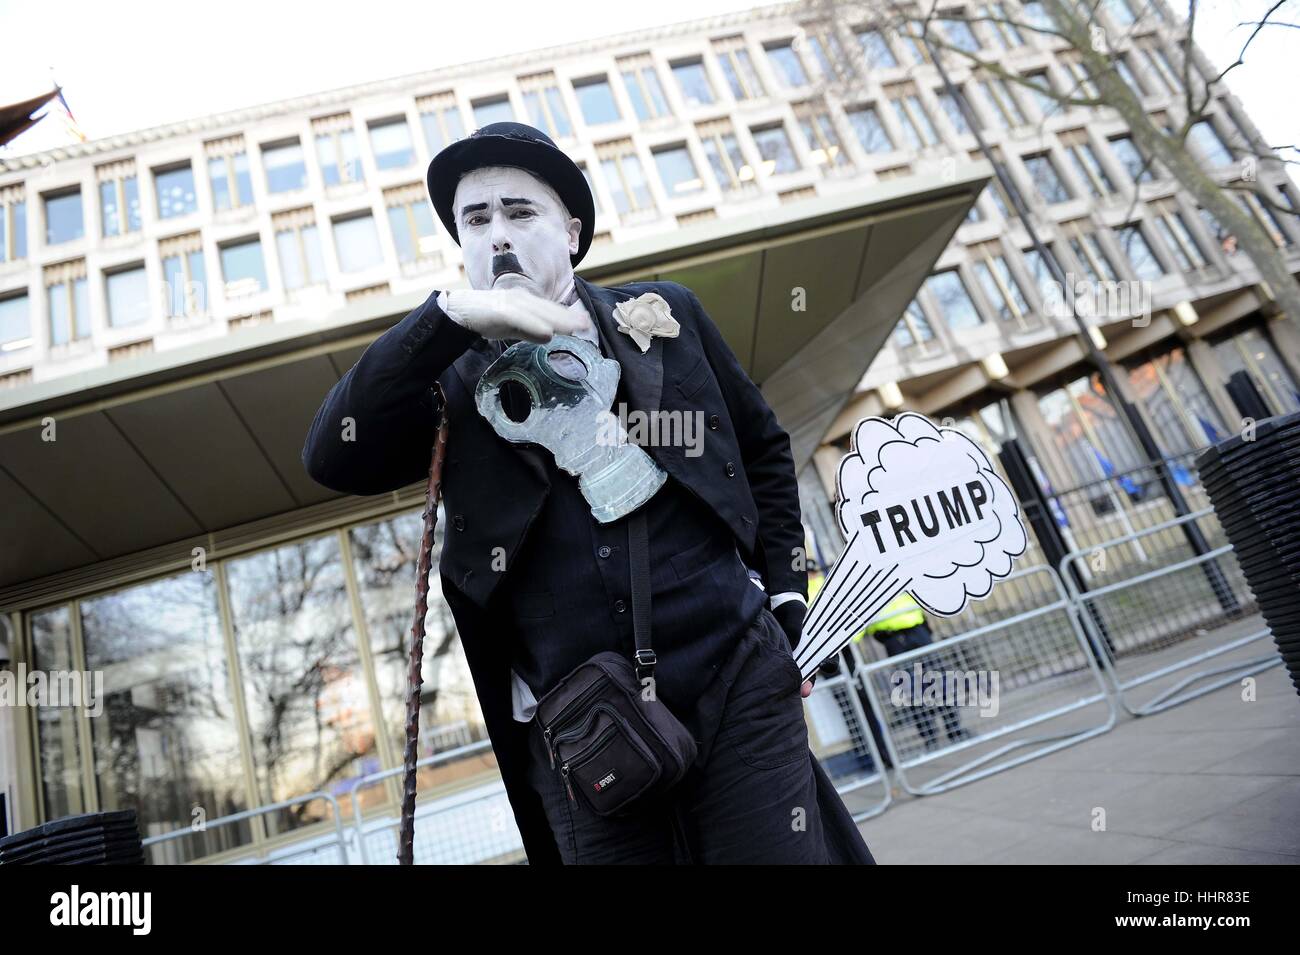 London, UK. 20th Jan, 2017. Donald Trump protest at the US Embassy in London, UK Credit: Dorset Media Service/Alamy Live News Stock Photo